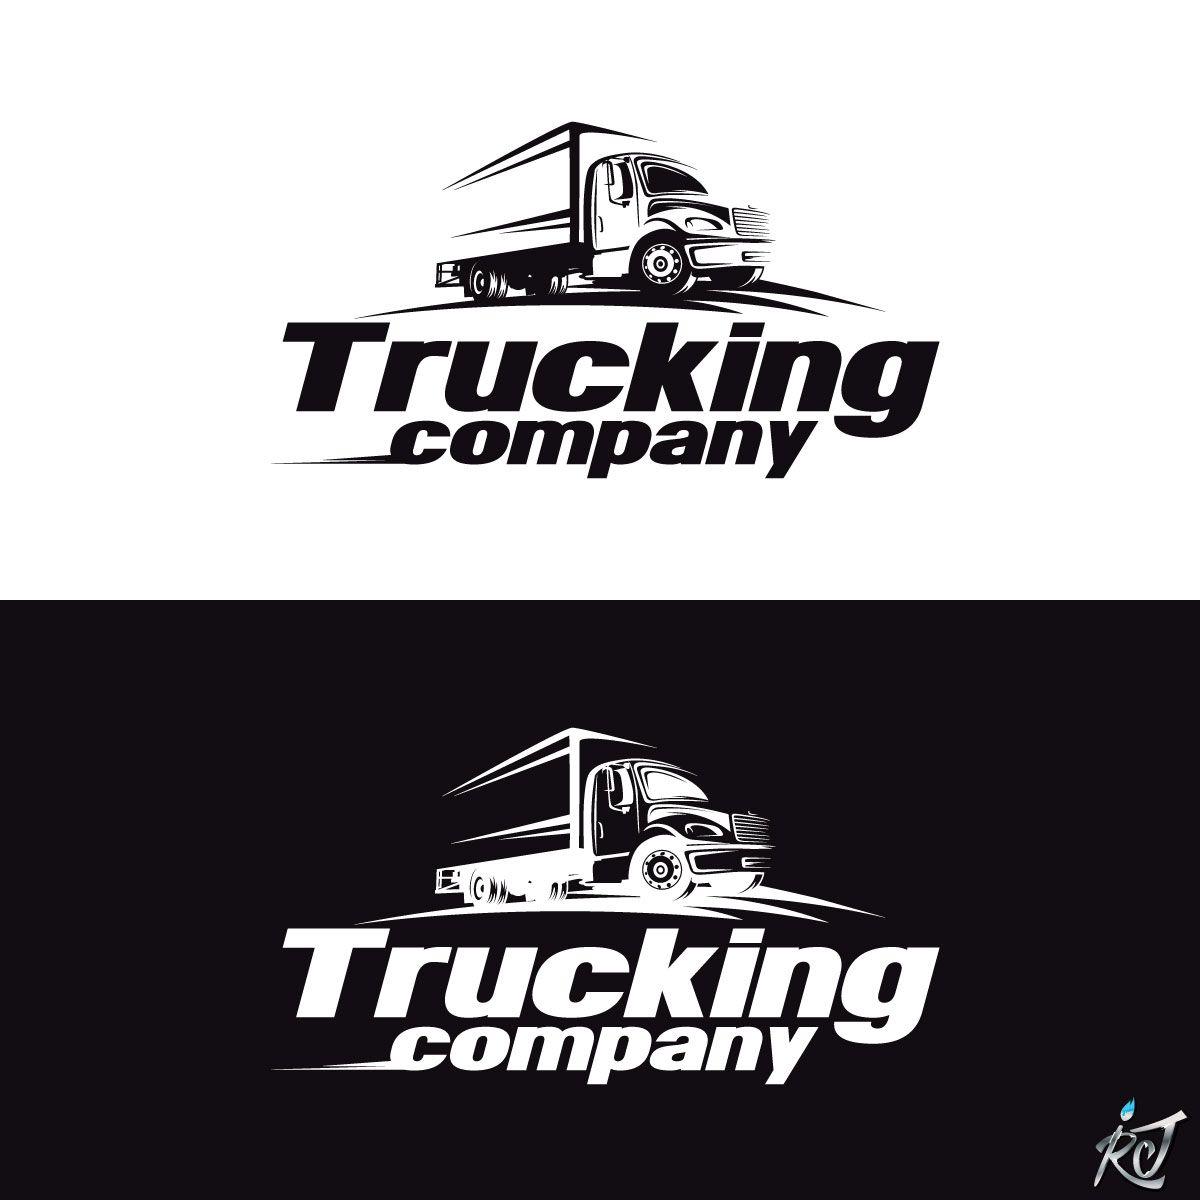 Trucking company logo design - coldkera